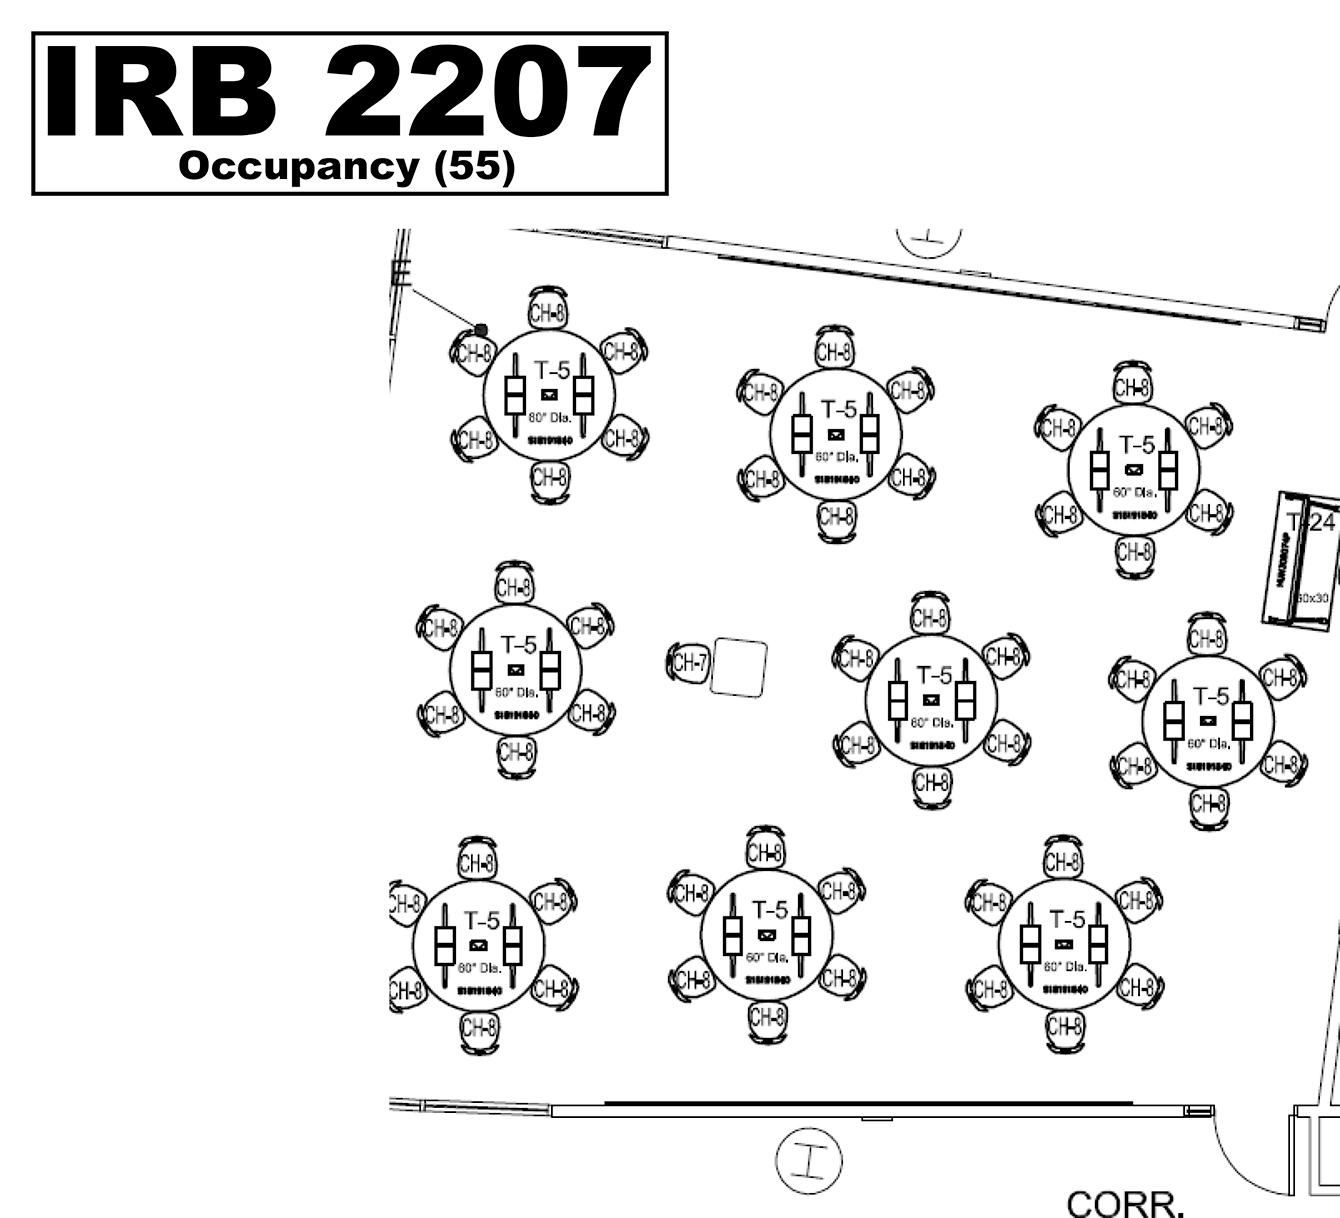 IRB2207 floorplan